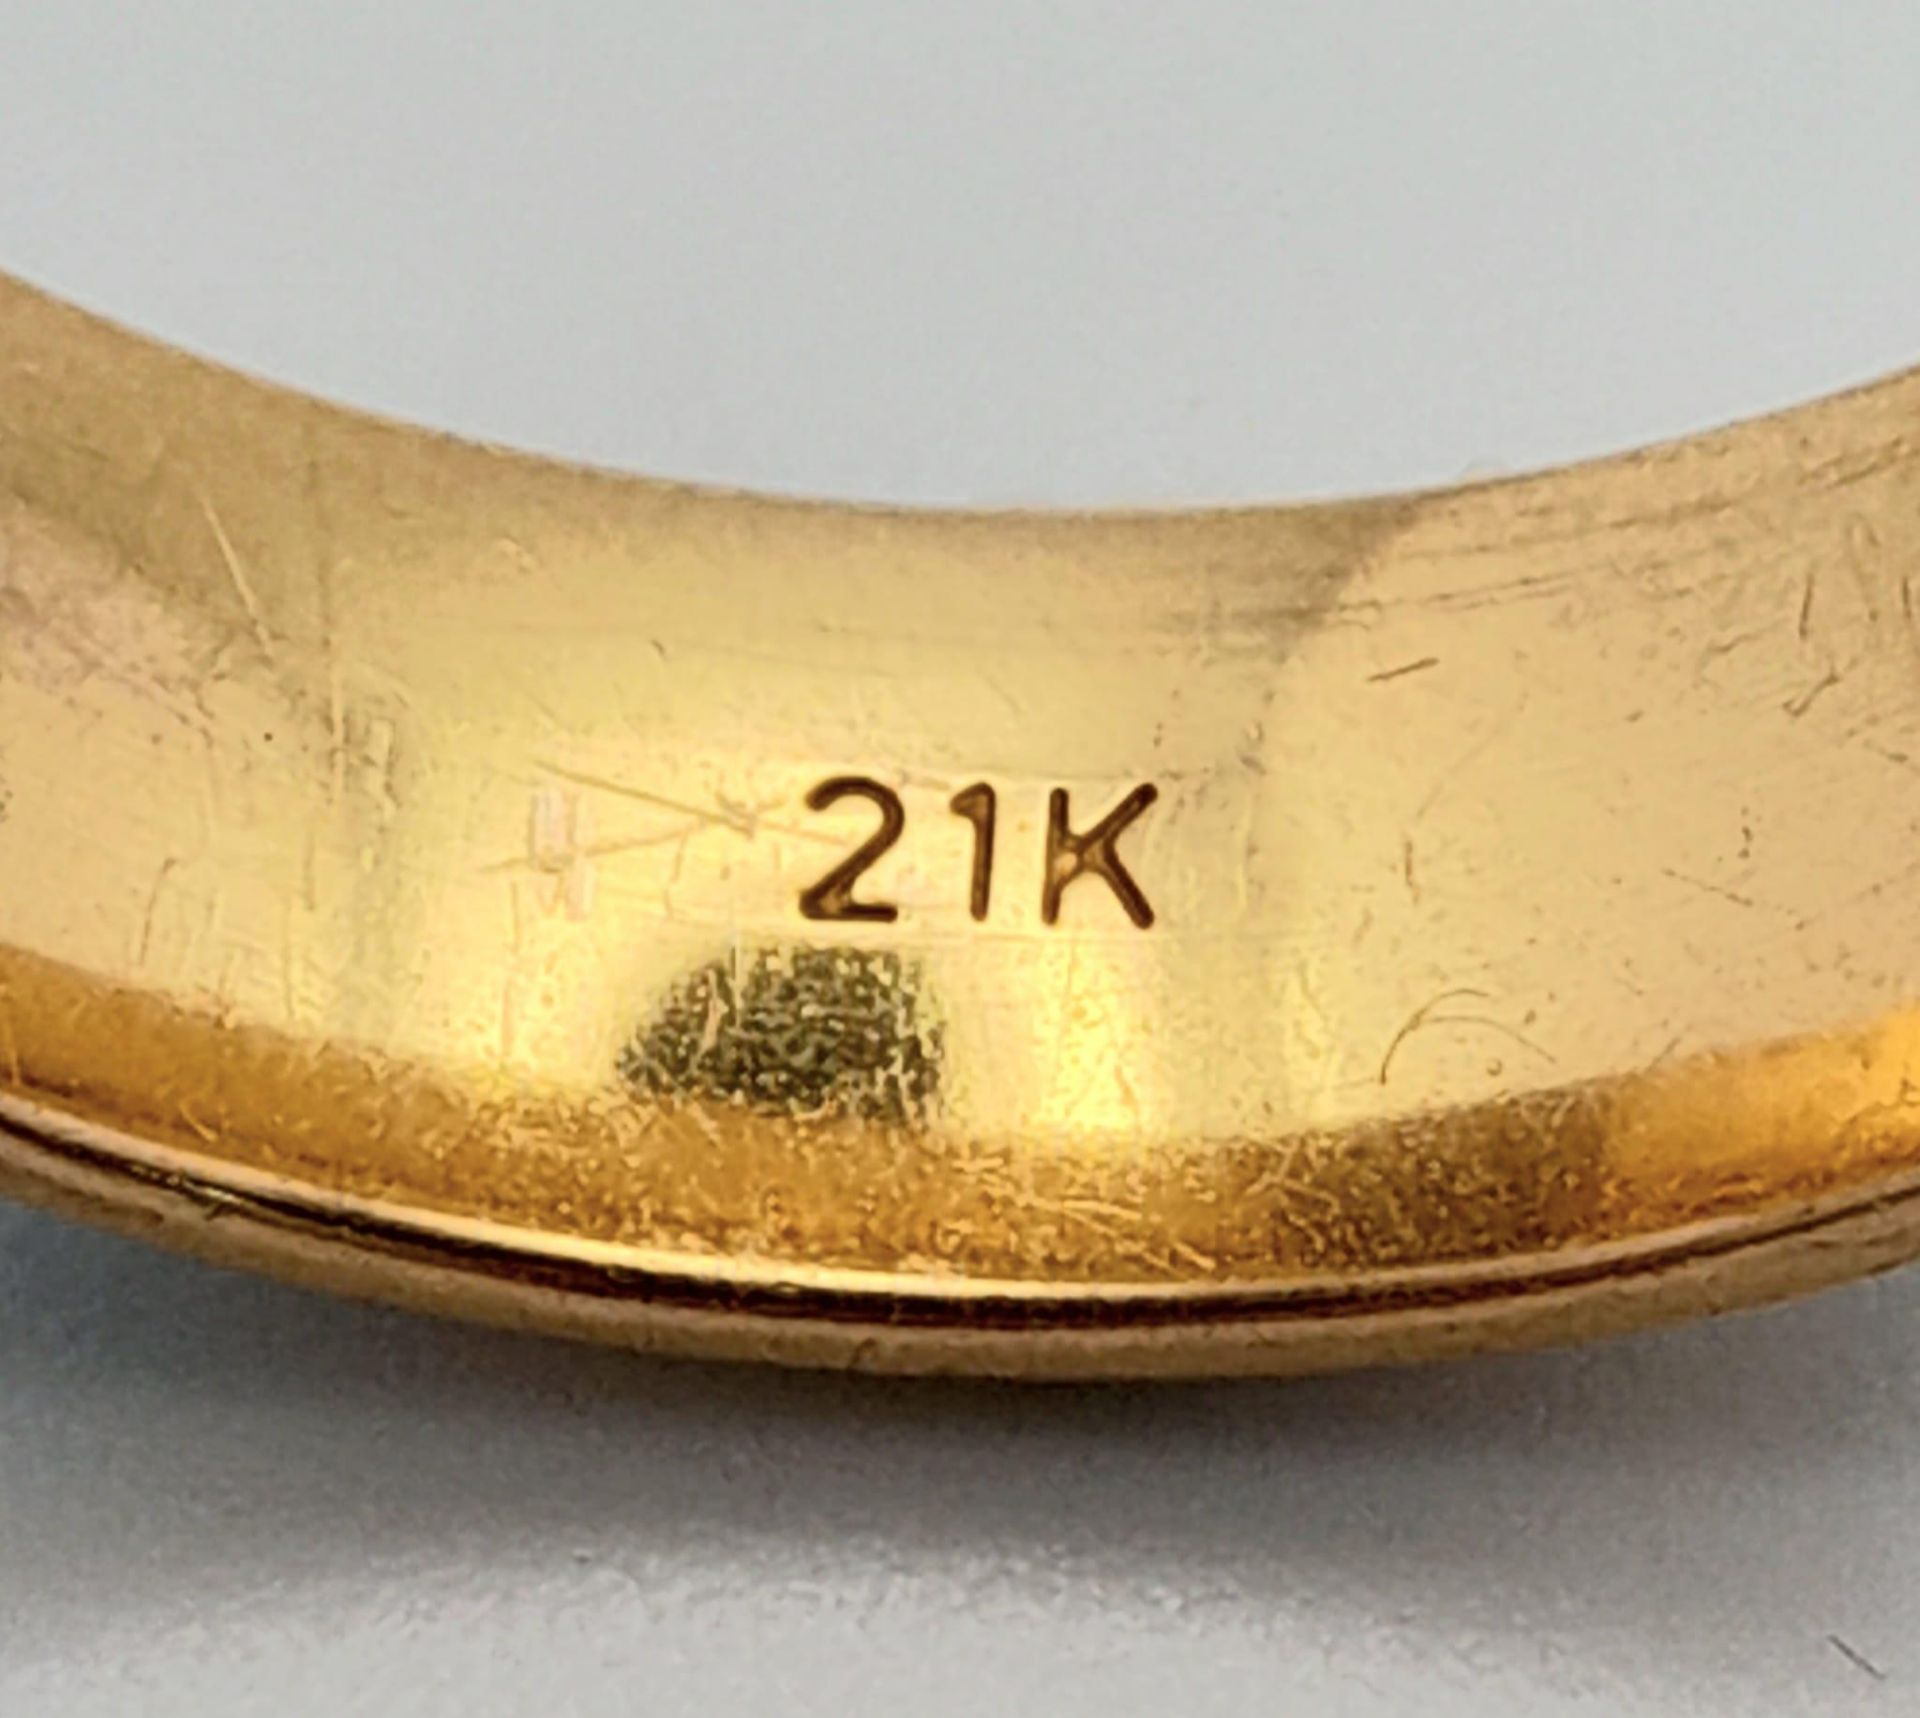 20K GOLD HAMSA HAND AND EVIL EYE DESIGN BAND RING 6.4G SIZE R - Image 4 of 4